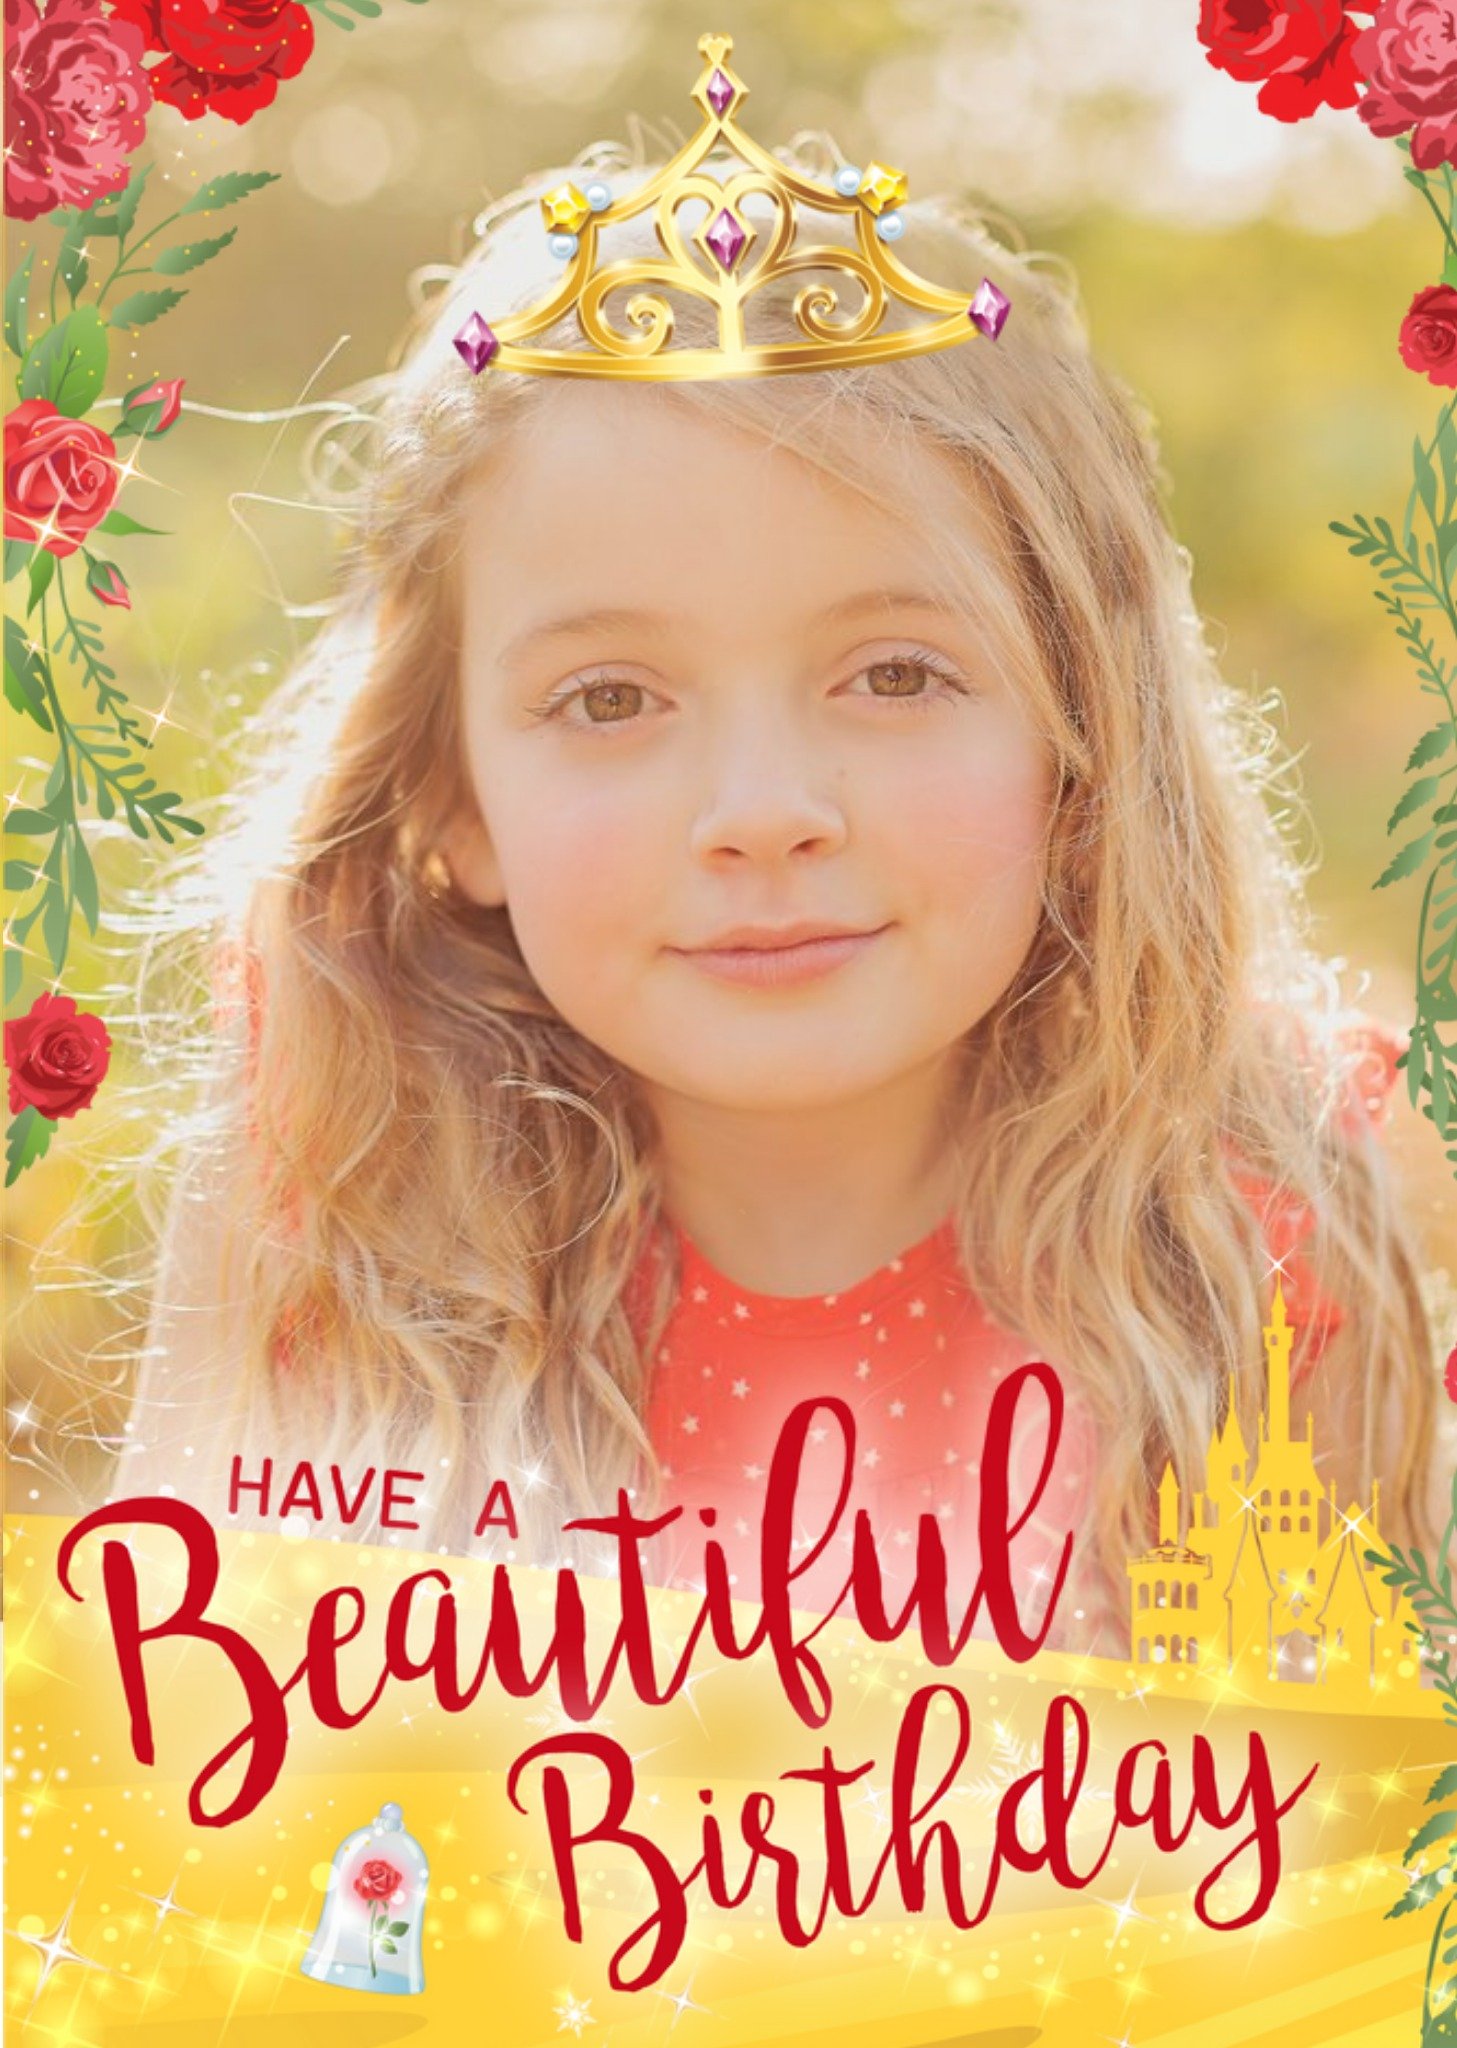 Disney Princess Beauty And The Beast Photo Upload Birthday Card, Large